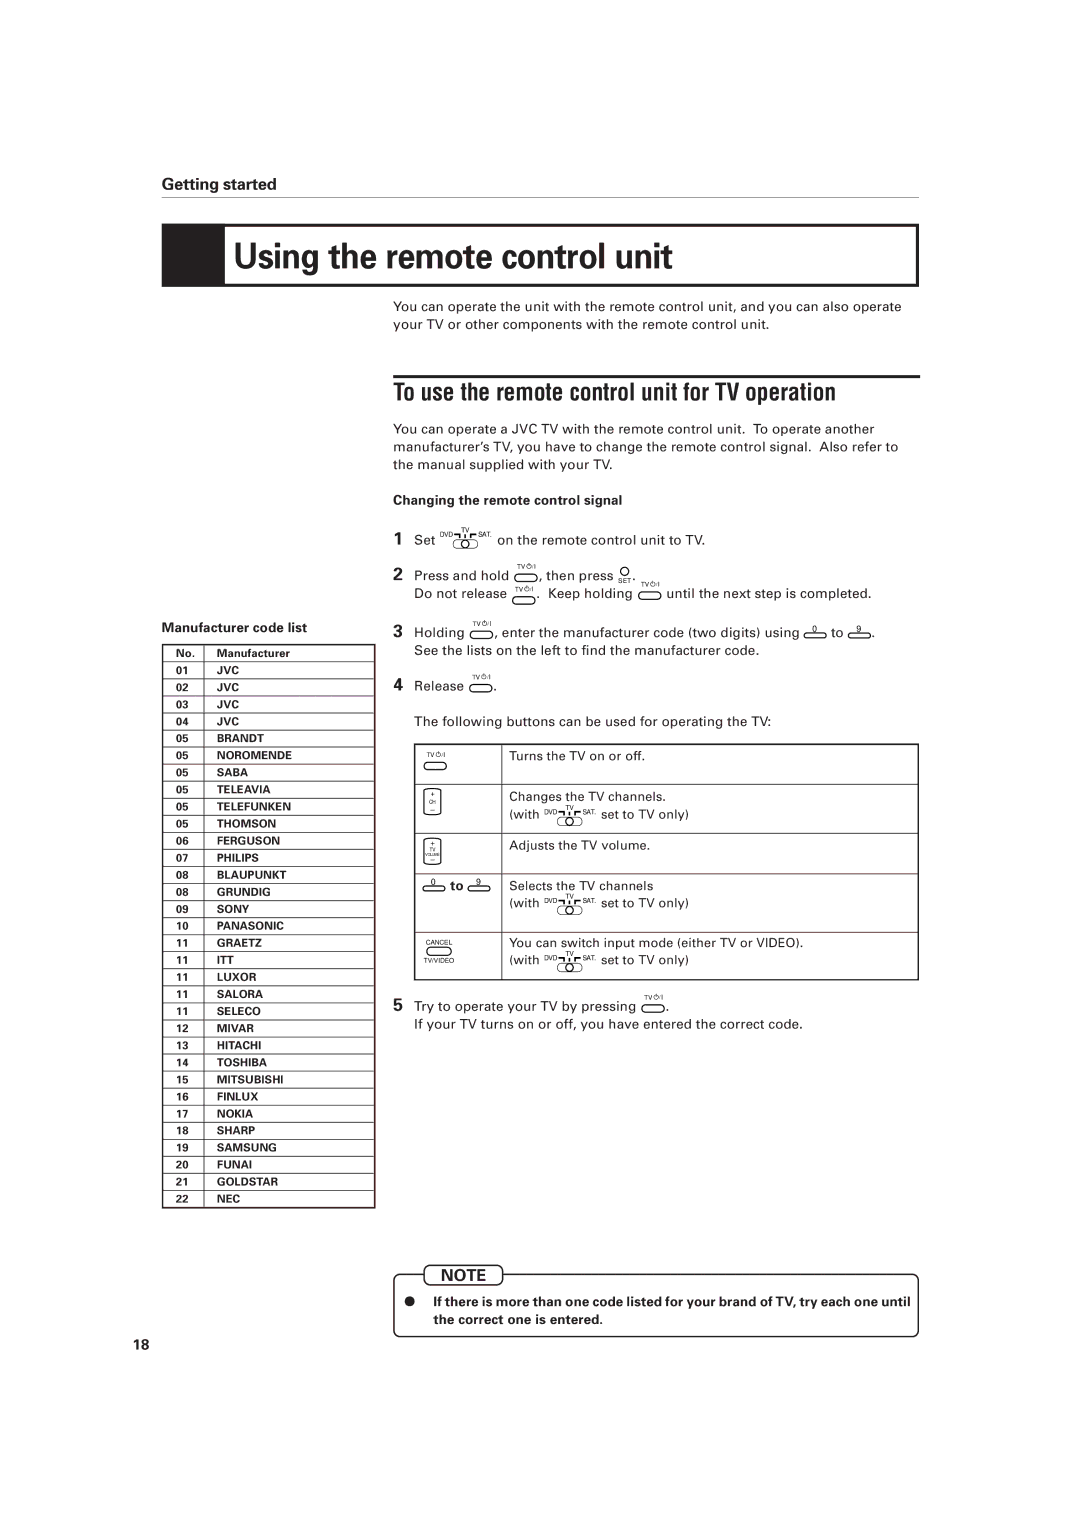 JVC XV-D701BK manual Using the remote control unit, To use the remote control unit for TV operation, Manufacturer code list 